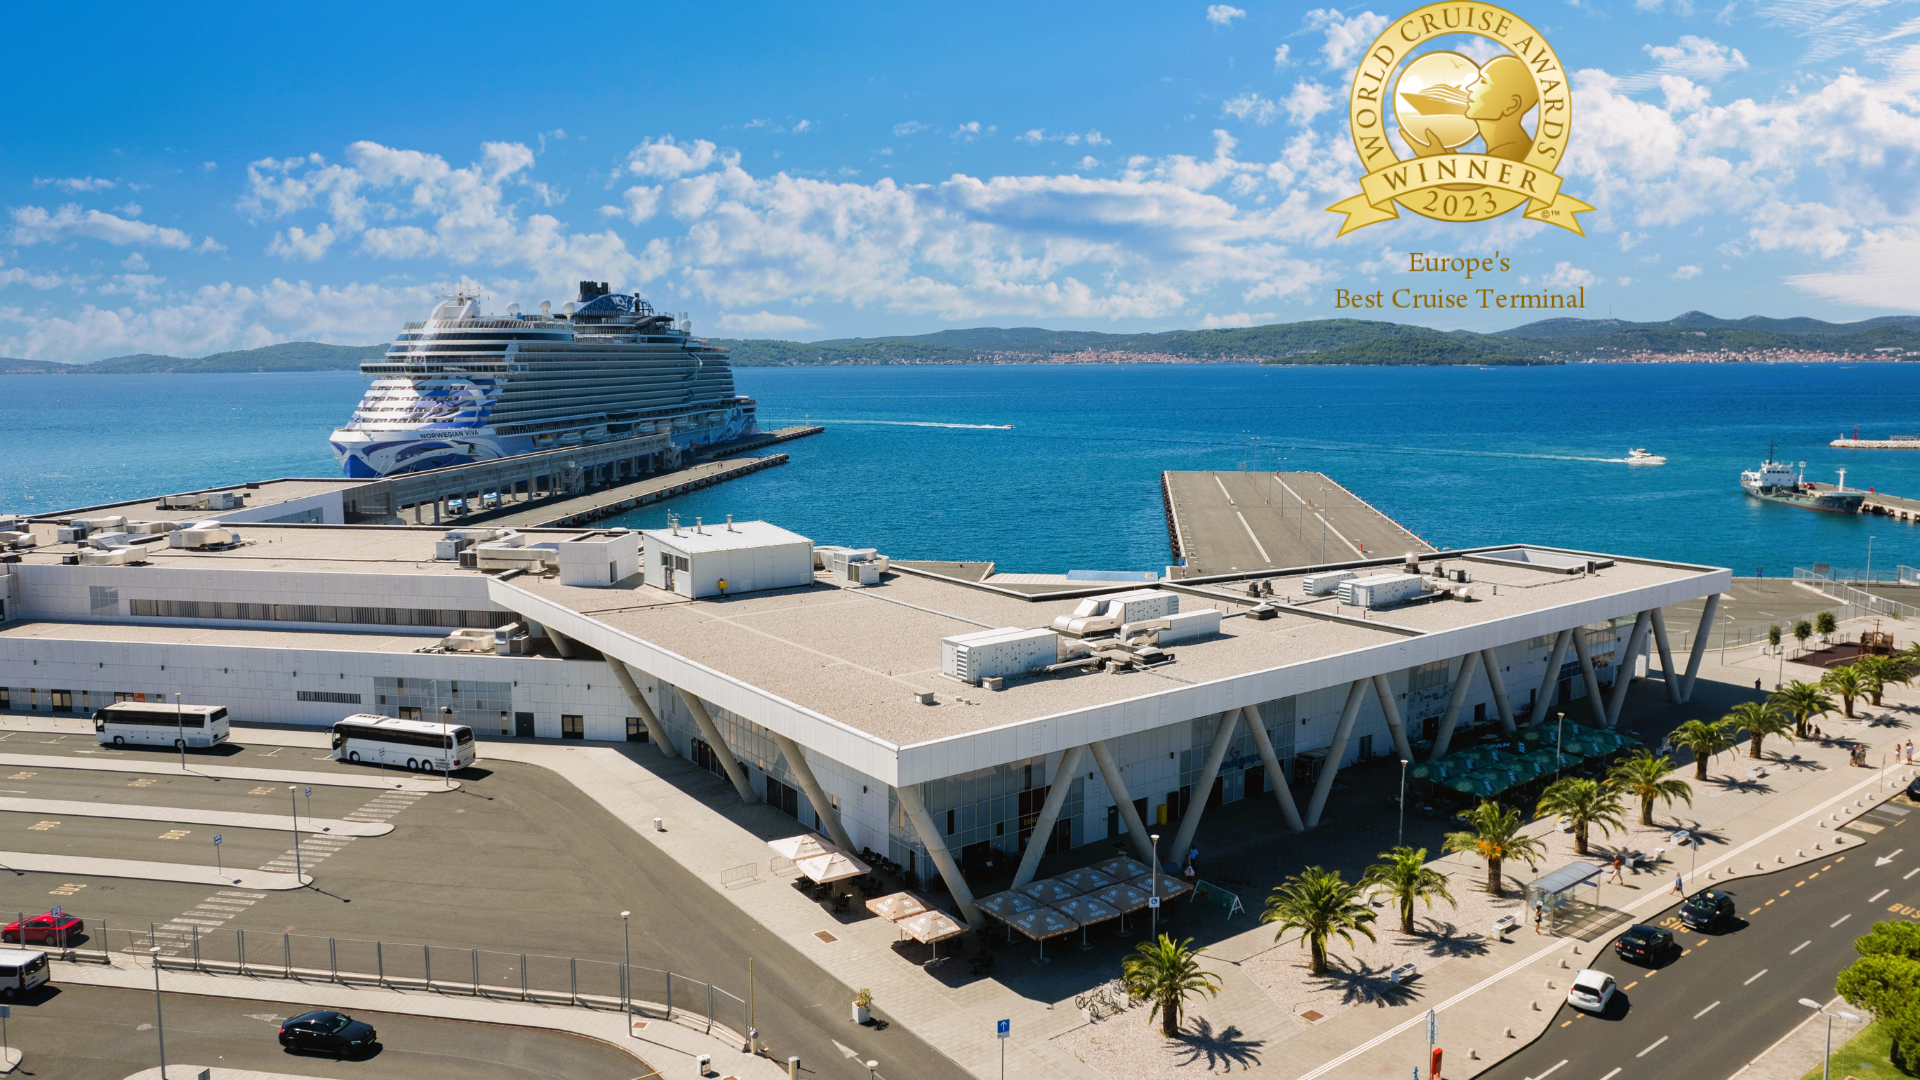 Zadar Cruise Port receives prestigious World Cruise Award for Europe’s Best Cruise Terminal